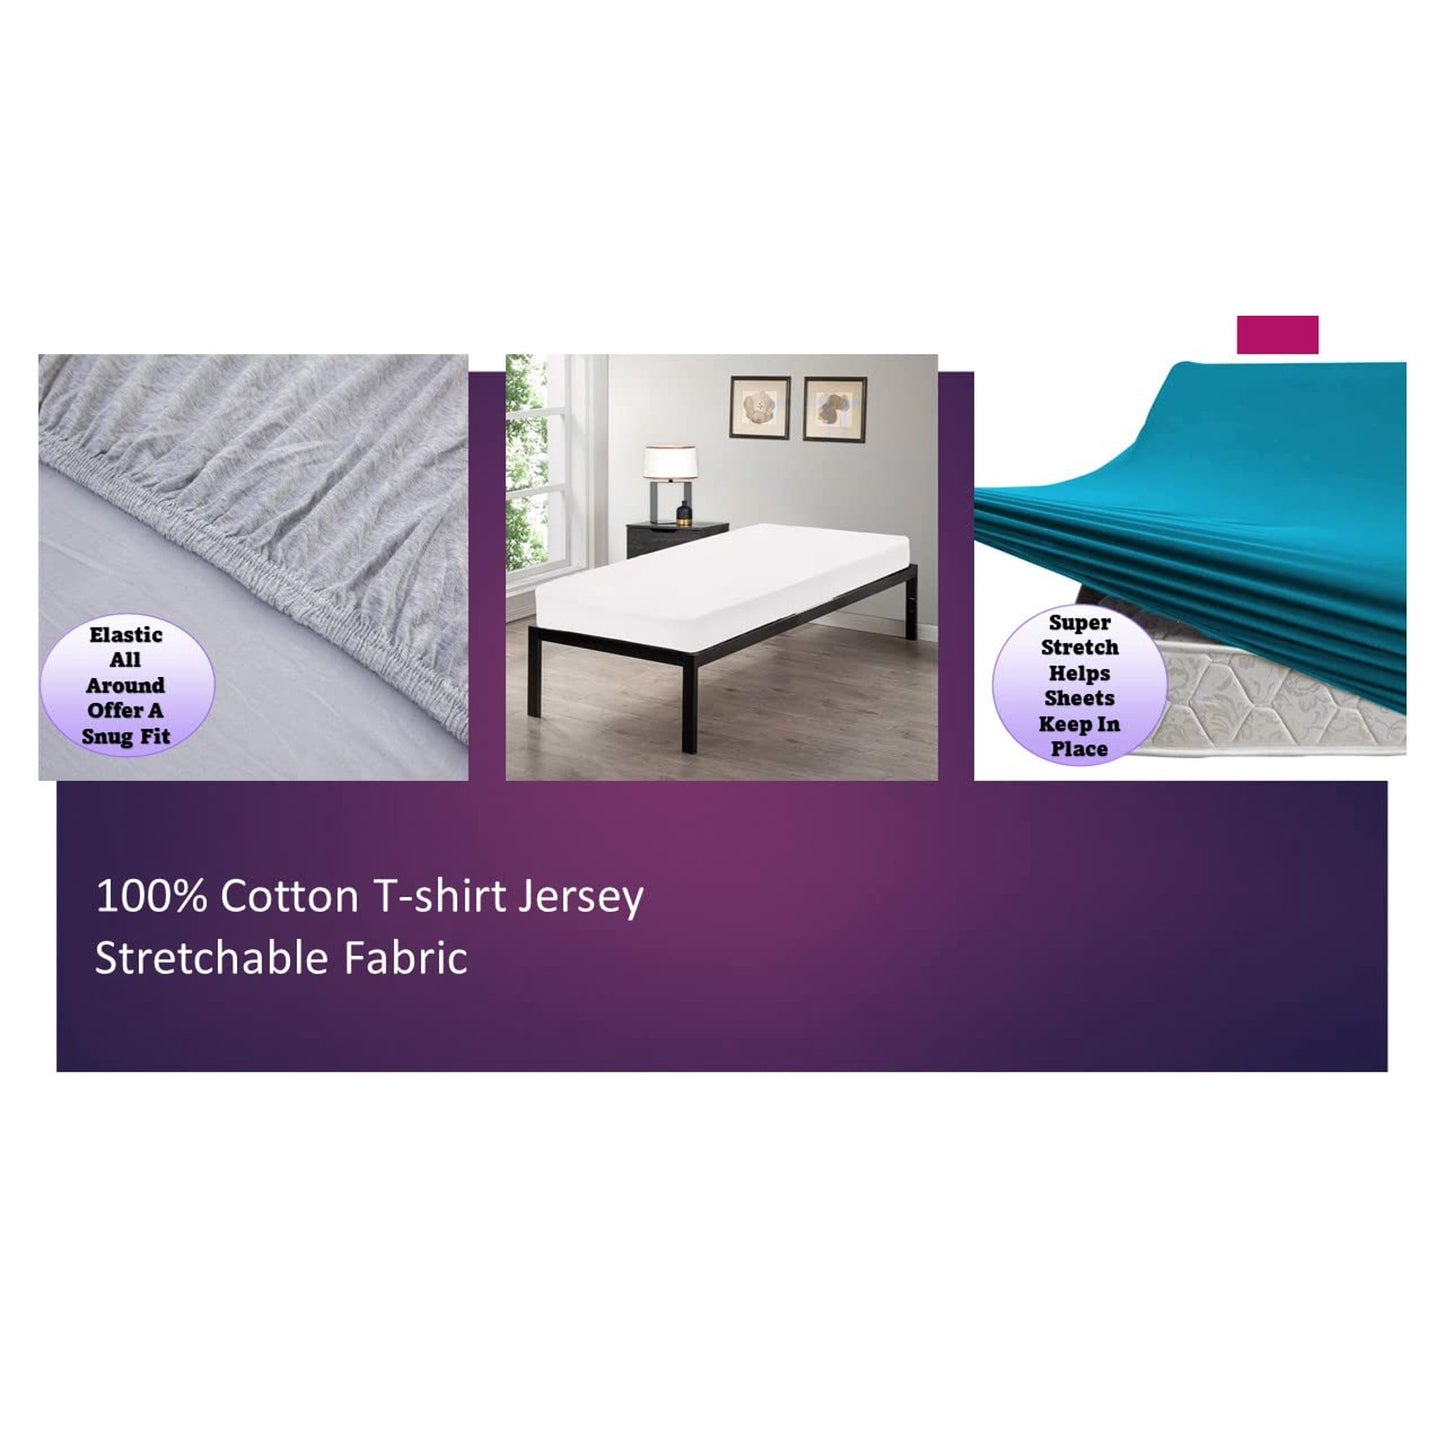 100% Combed T-Shirt Cotton Jersey Knit Camp Sheet Set, 1 Fitted cot Sheet, 1 Flat Sheet, 1 Standard Pillow case Black Twin